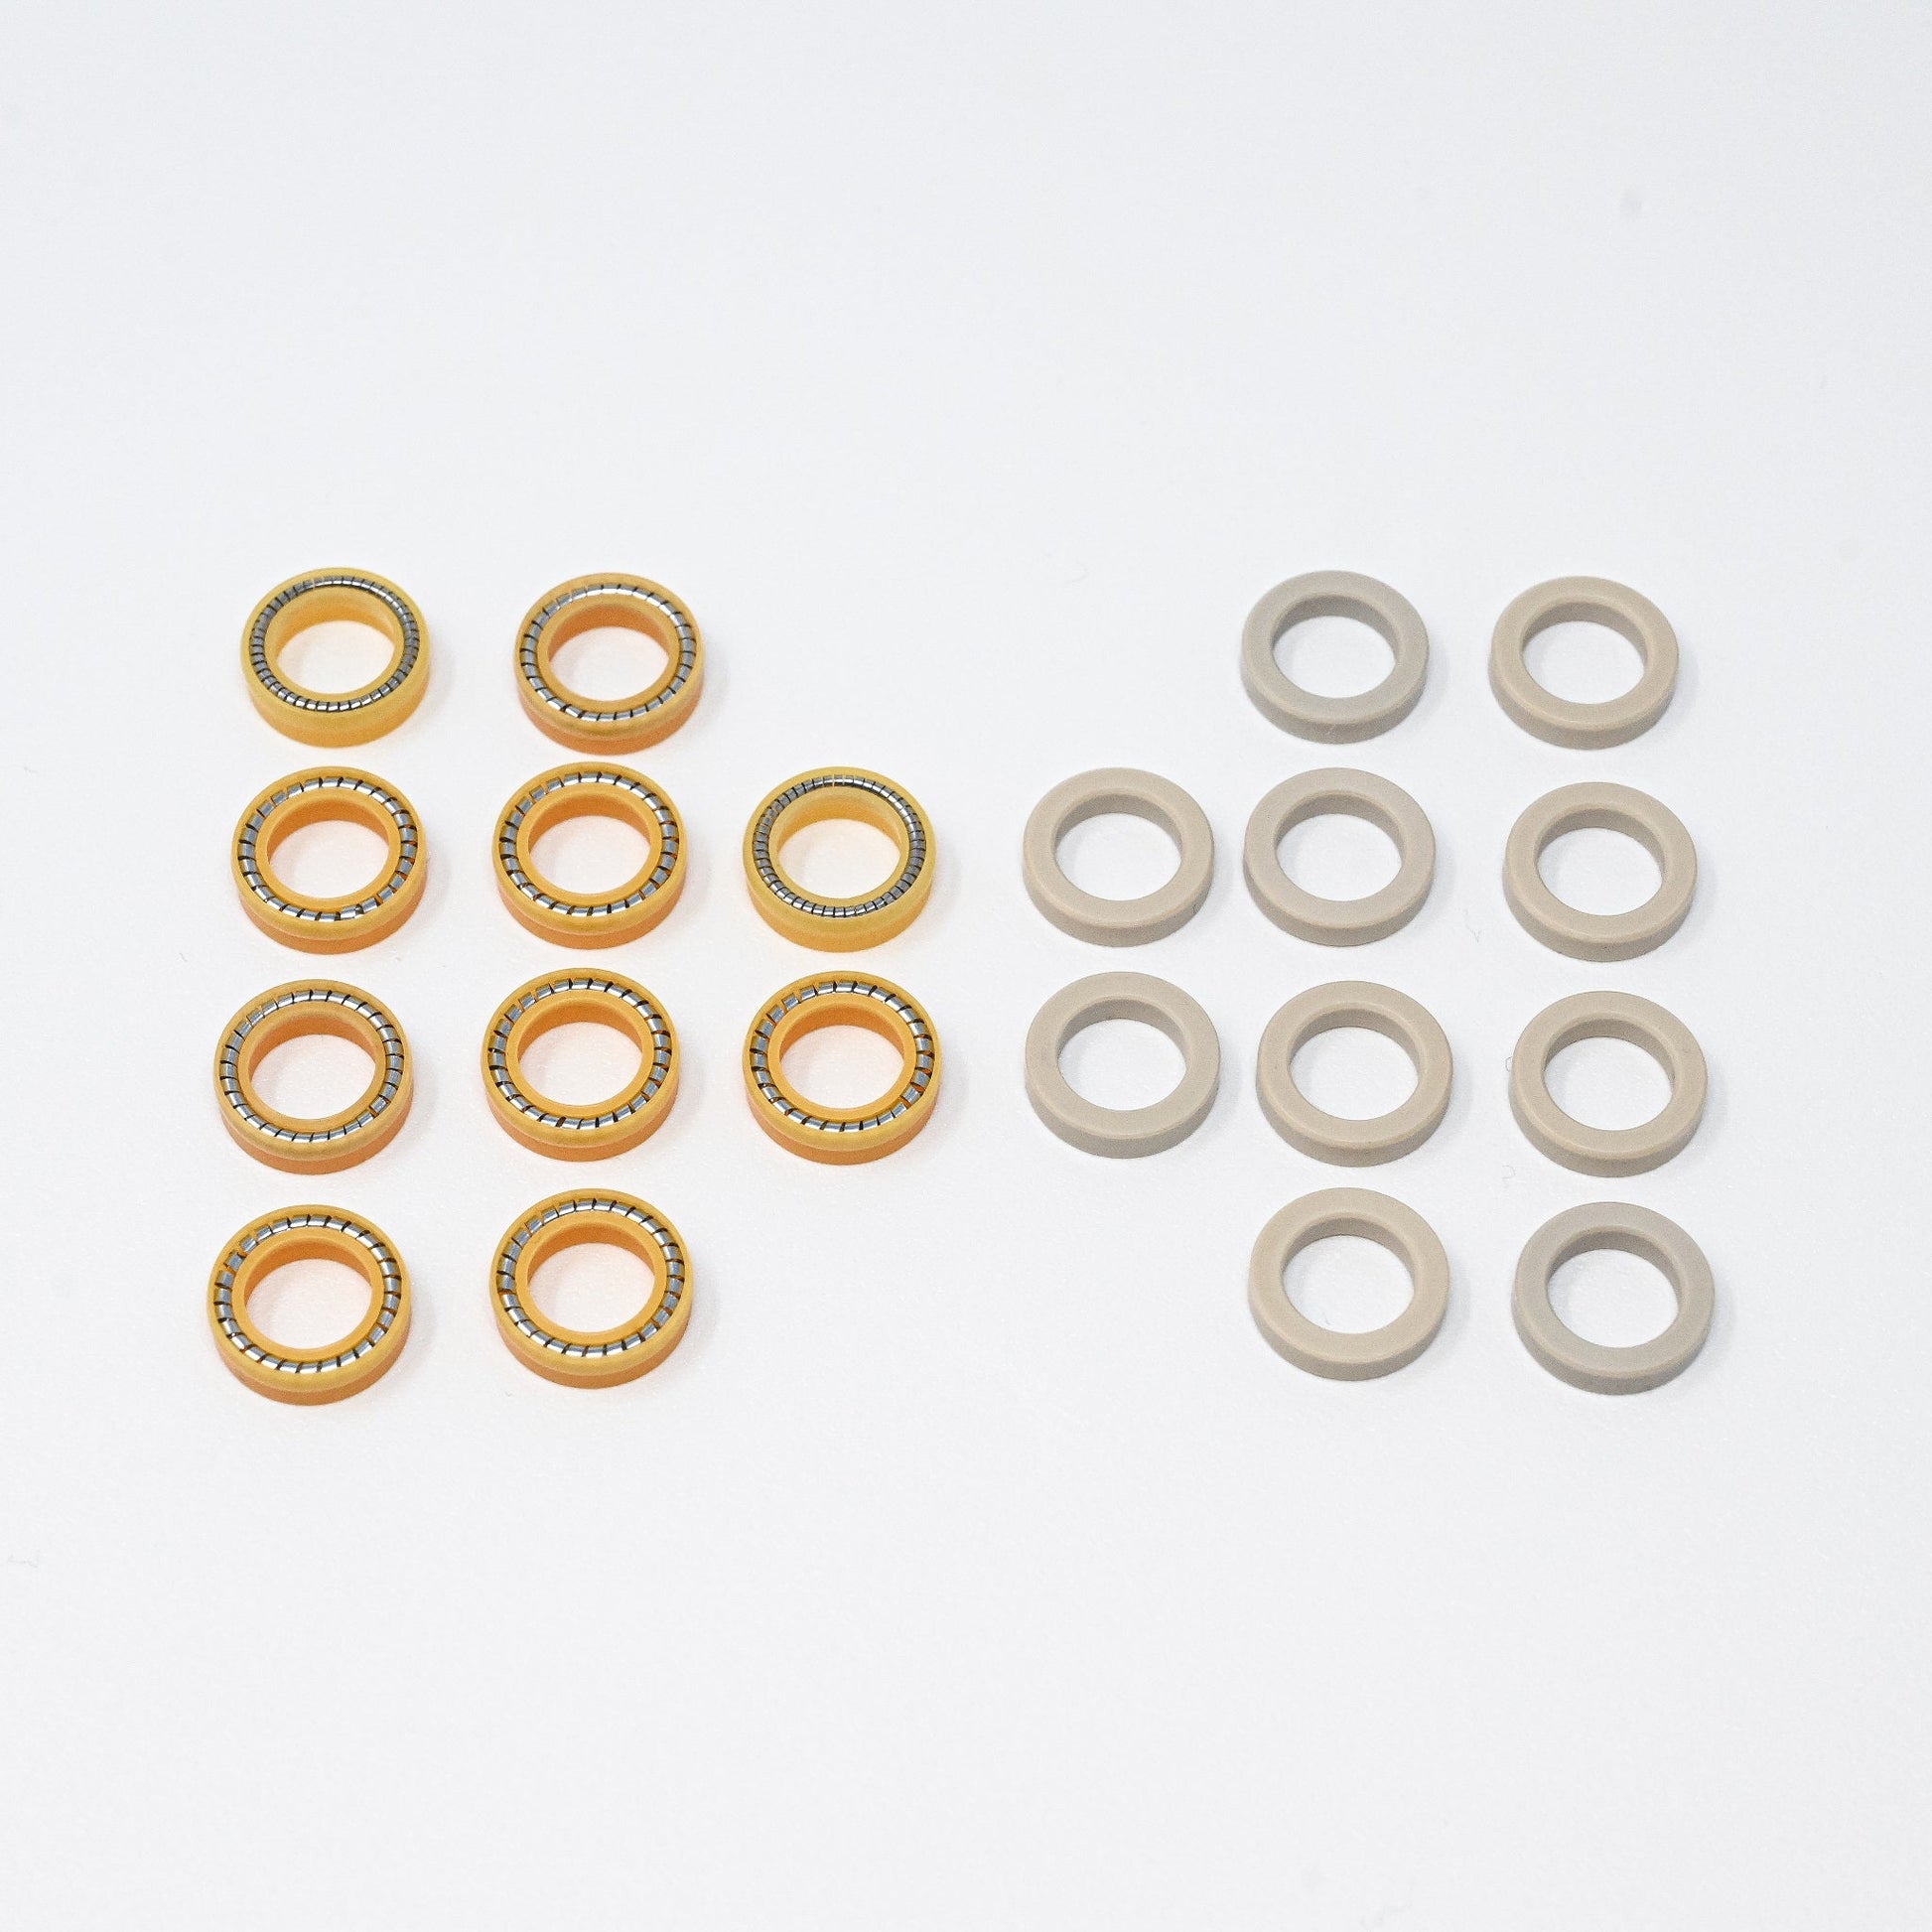 Set of o-rings and seals.